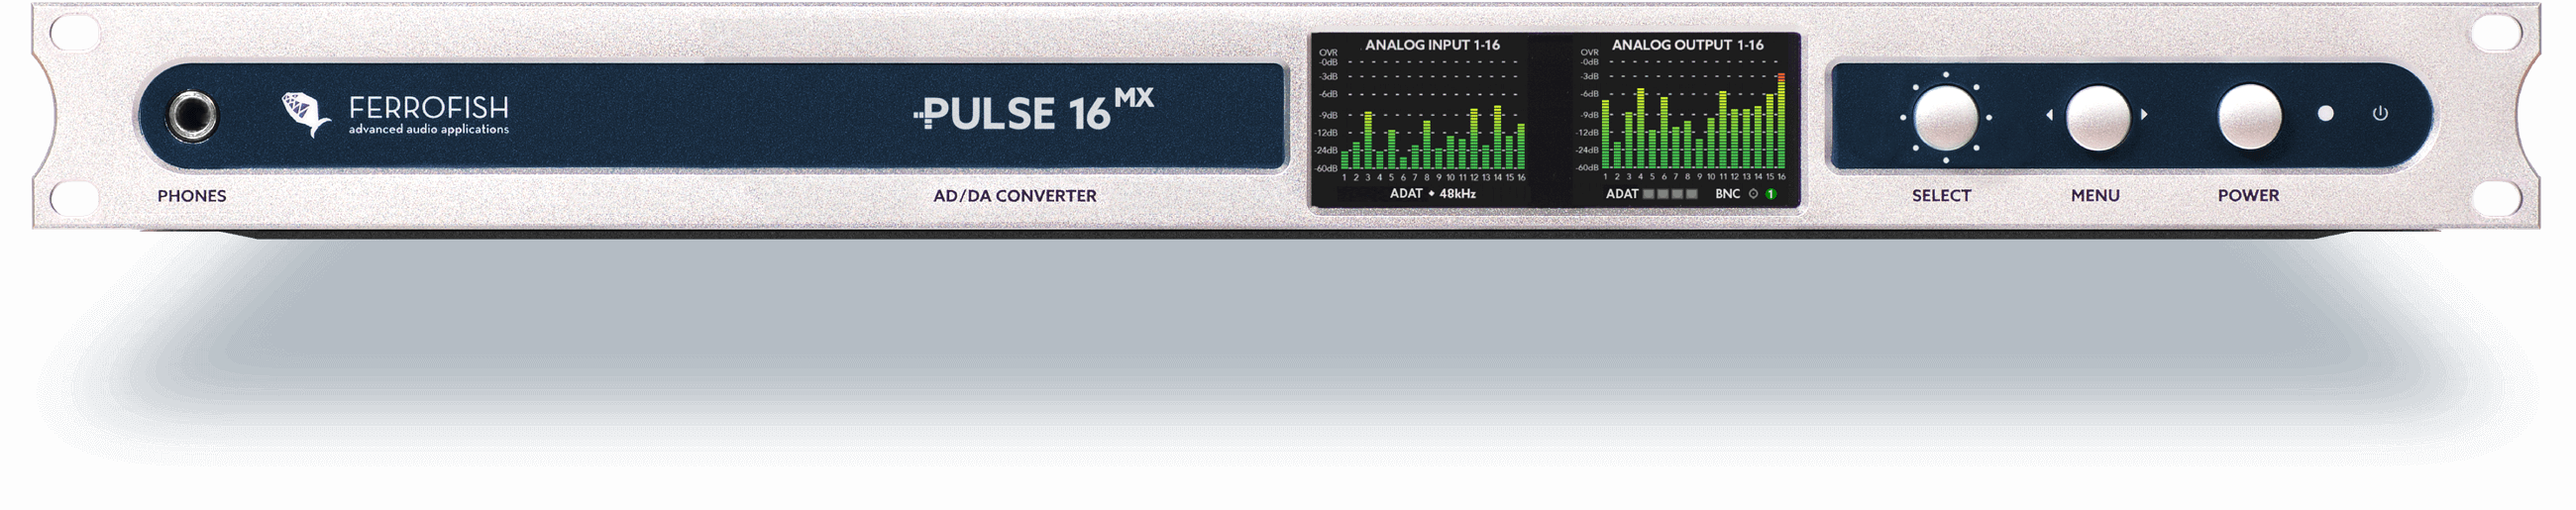 Ferrofish Pulse 16 MX +24dBu - Same as Pulse 16 MX, with analog I/O modified for +24dBu level compatibility